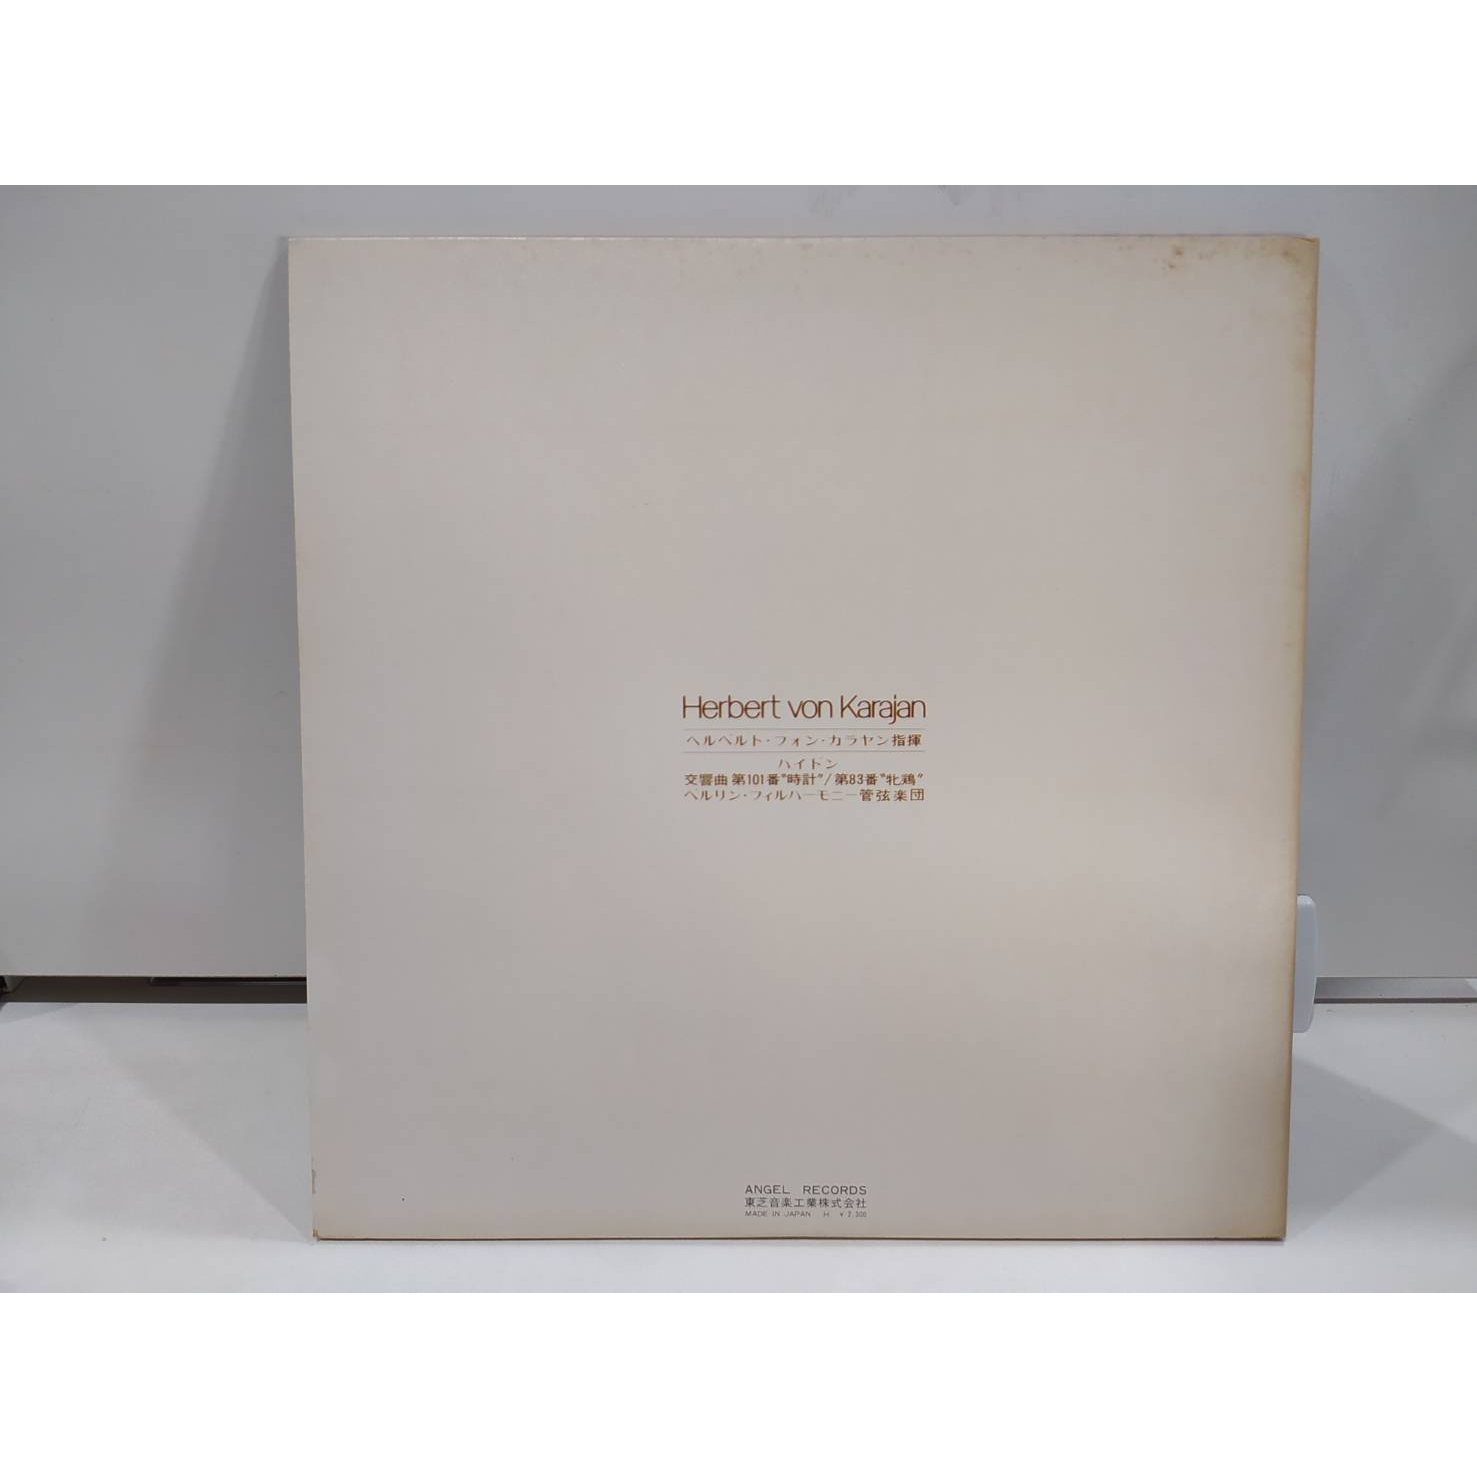 1lp-vinyl-records-แผ่นเสียงไวนิล-haydn-karajan-orchestre-philharmonique-de-berlin-j14a160